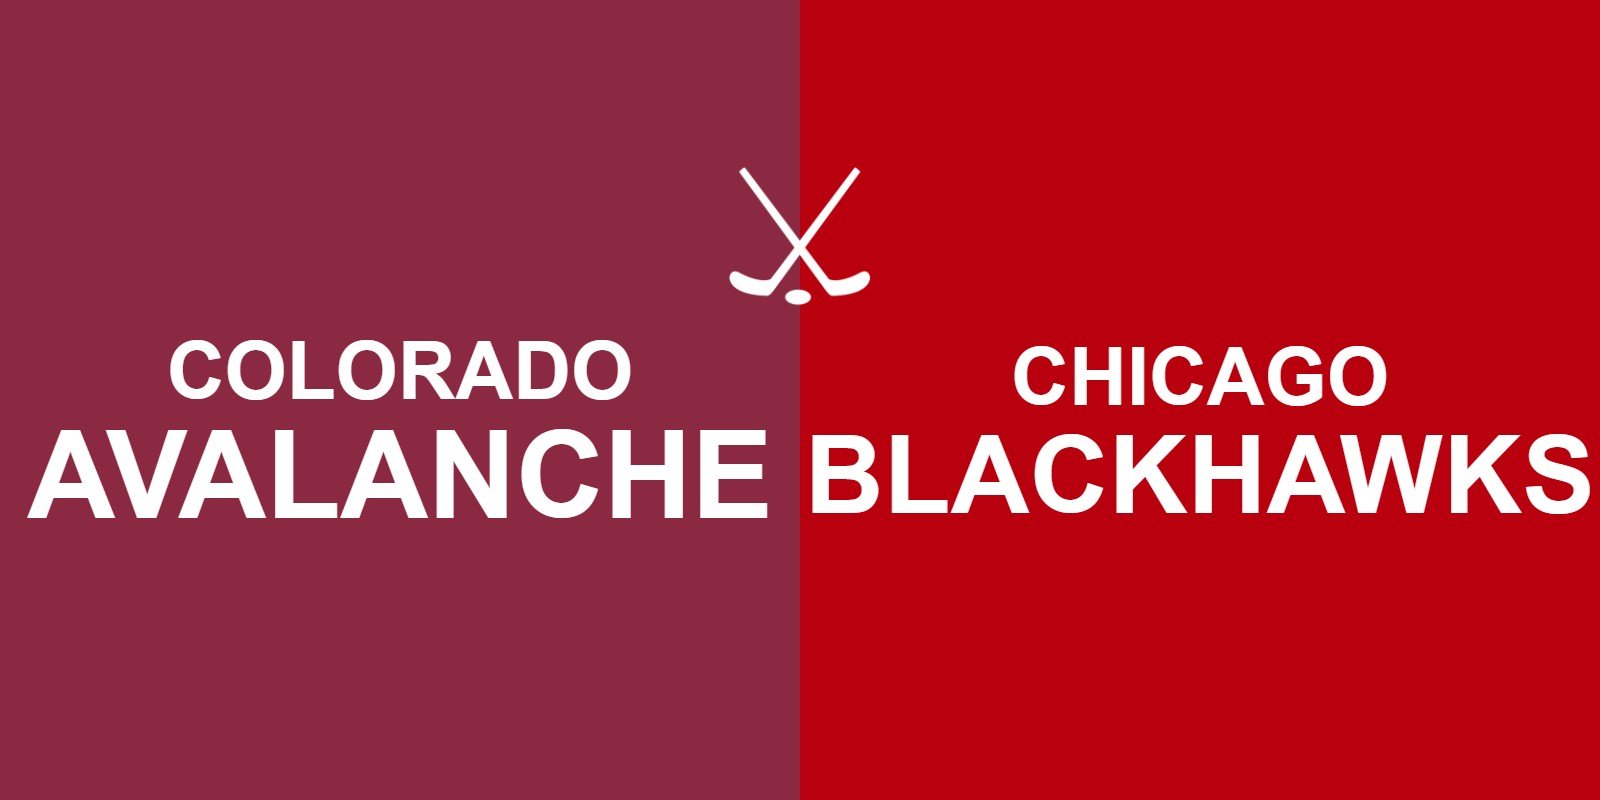 Avalanche vs Blackhawks Tickets